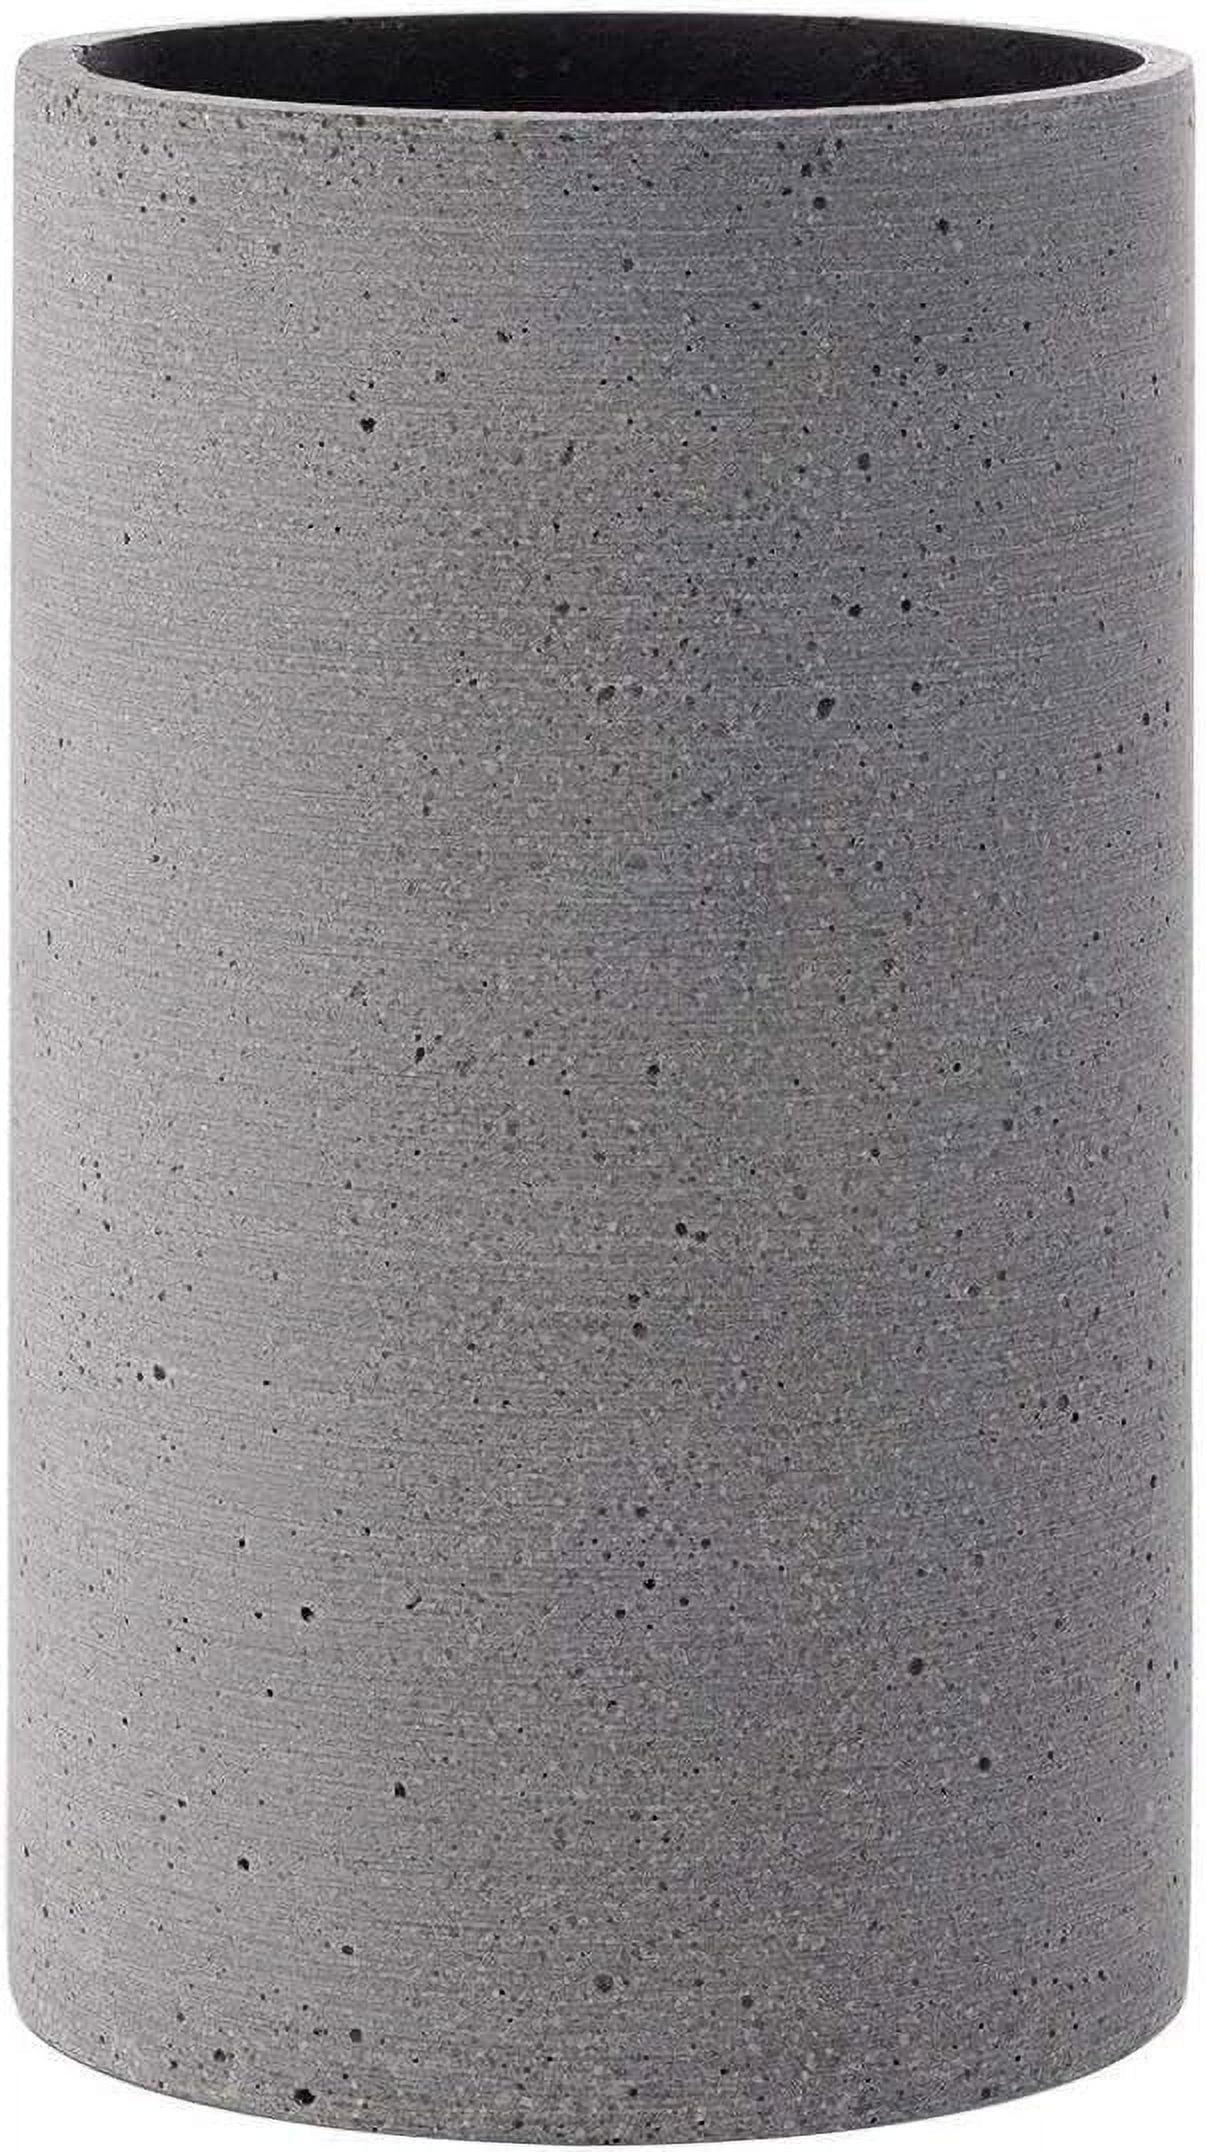 Elegant Bouquet Metal Table Vase in Dark Gray, Round Shape